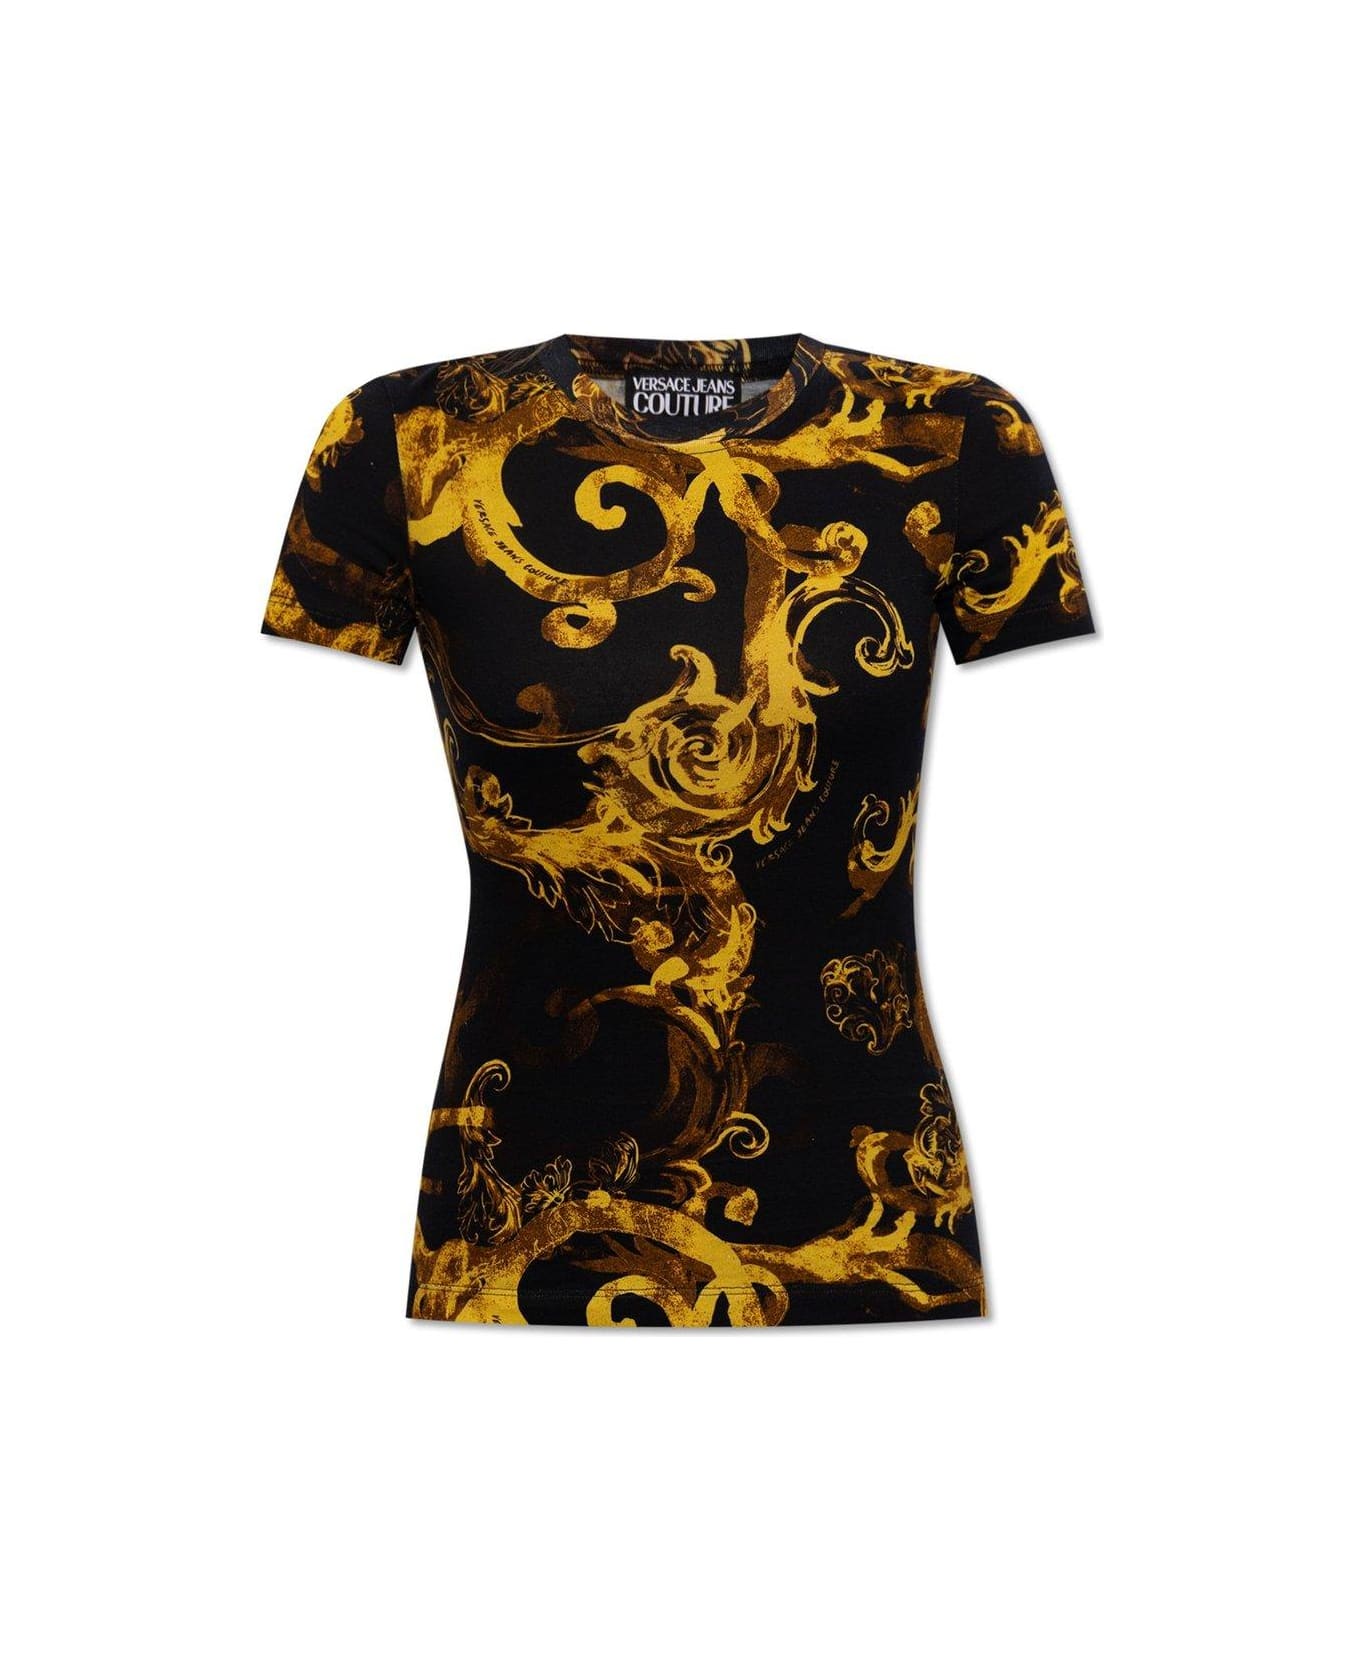 Versace Jeans Couture Barocco Print Crewneck T-shirt - Black/gold